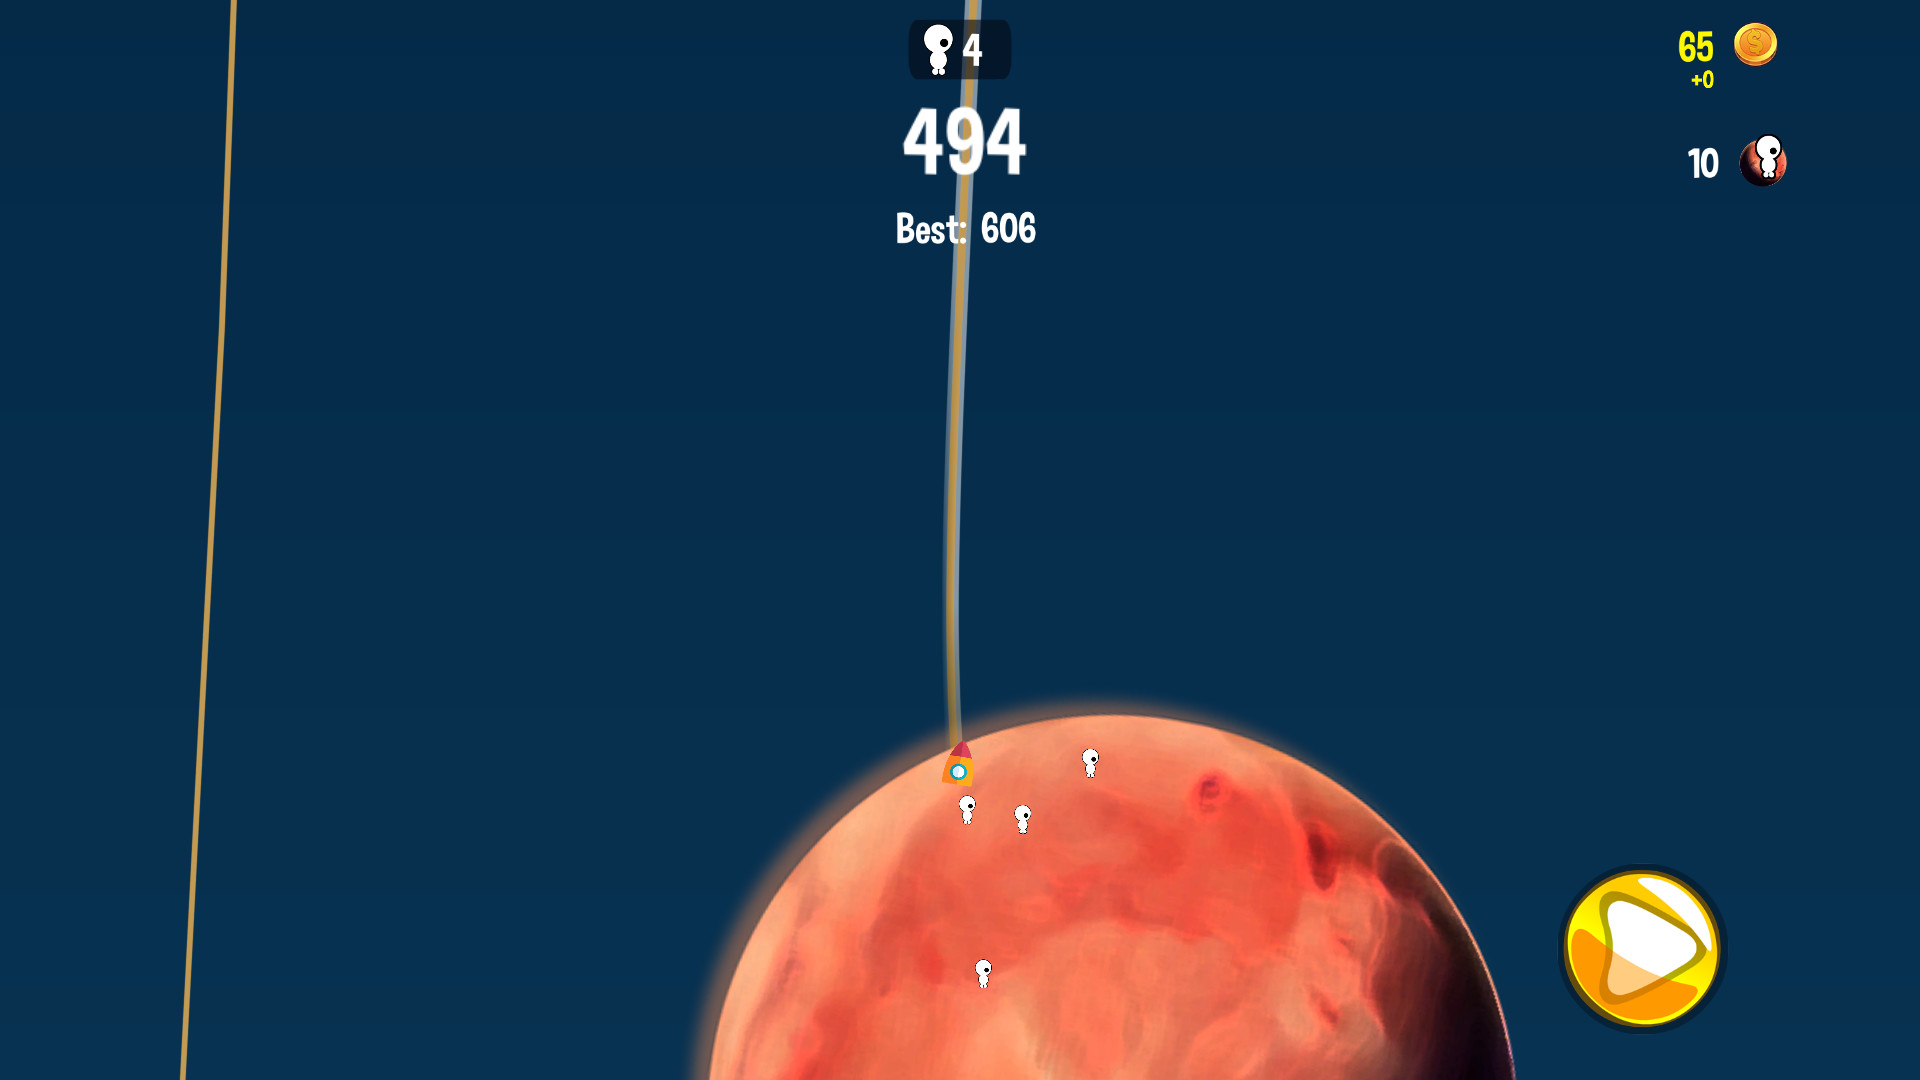 Space Rocket screenshot